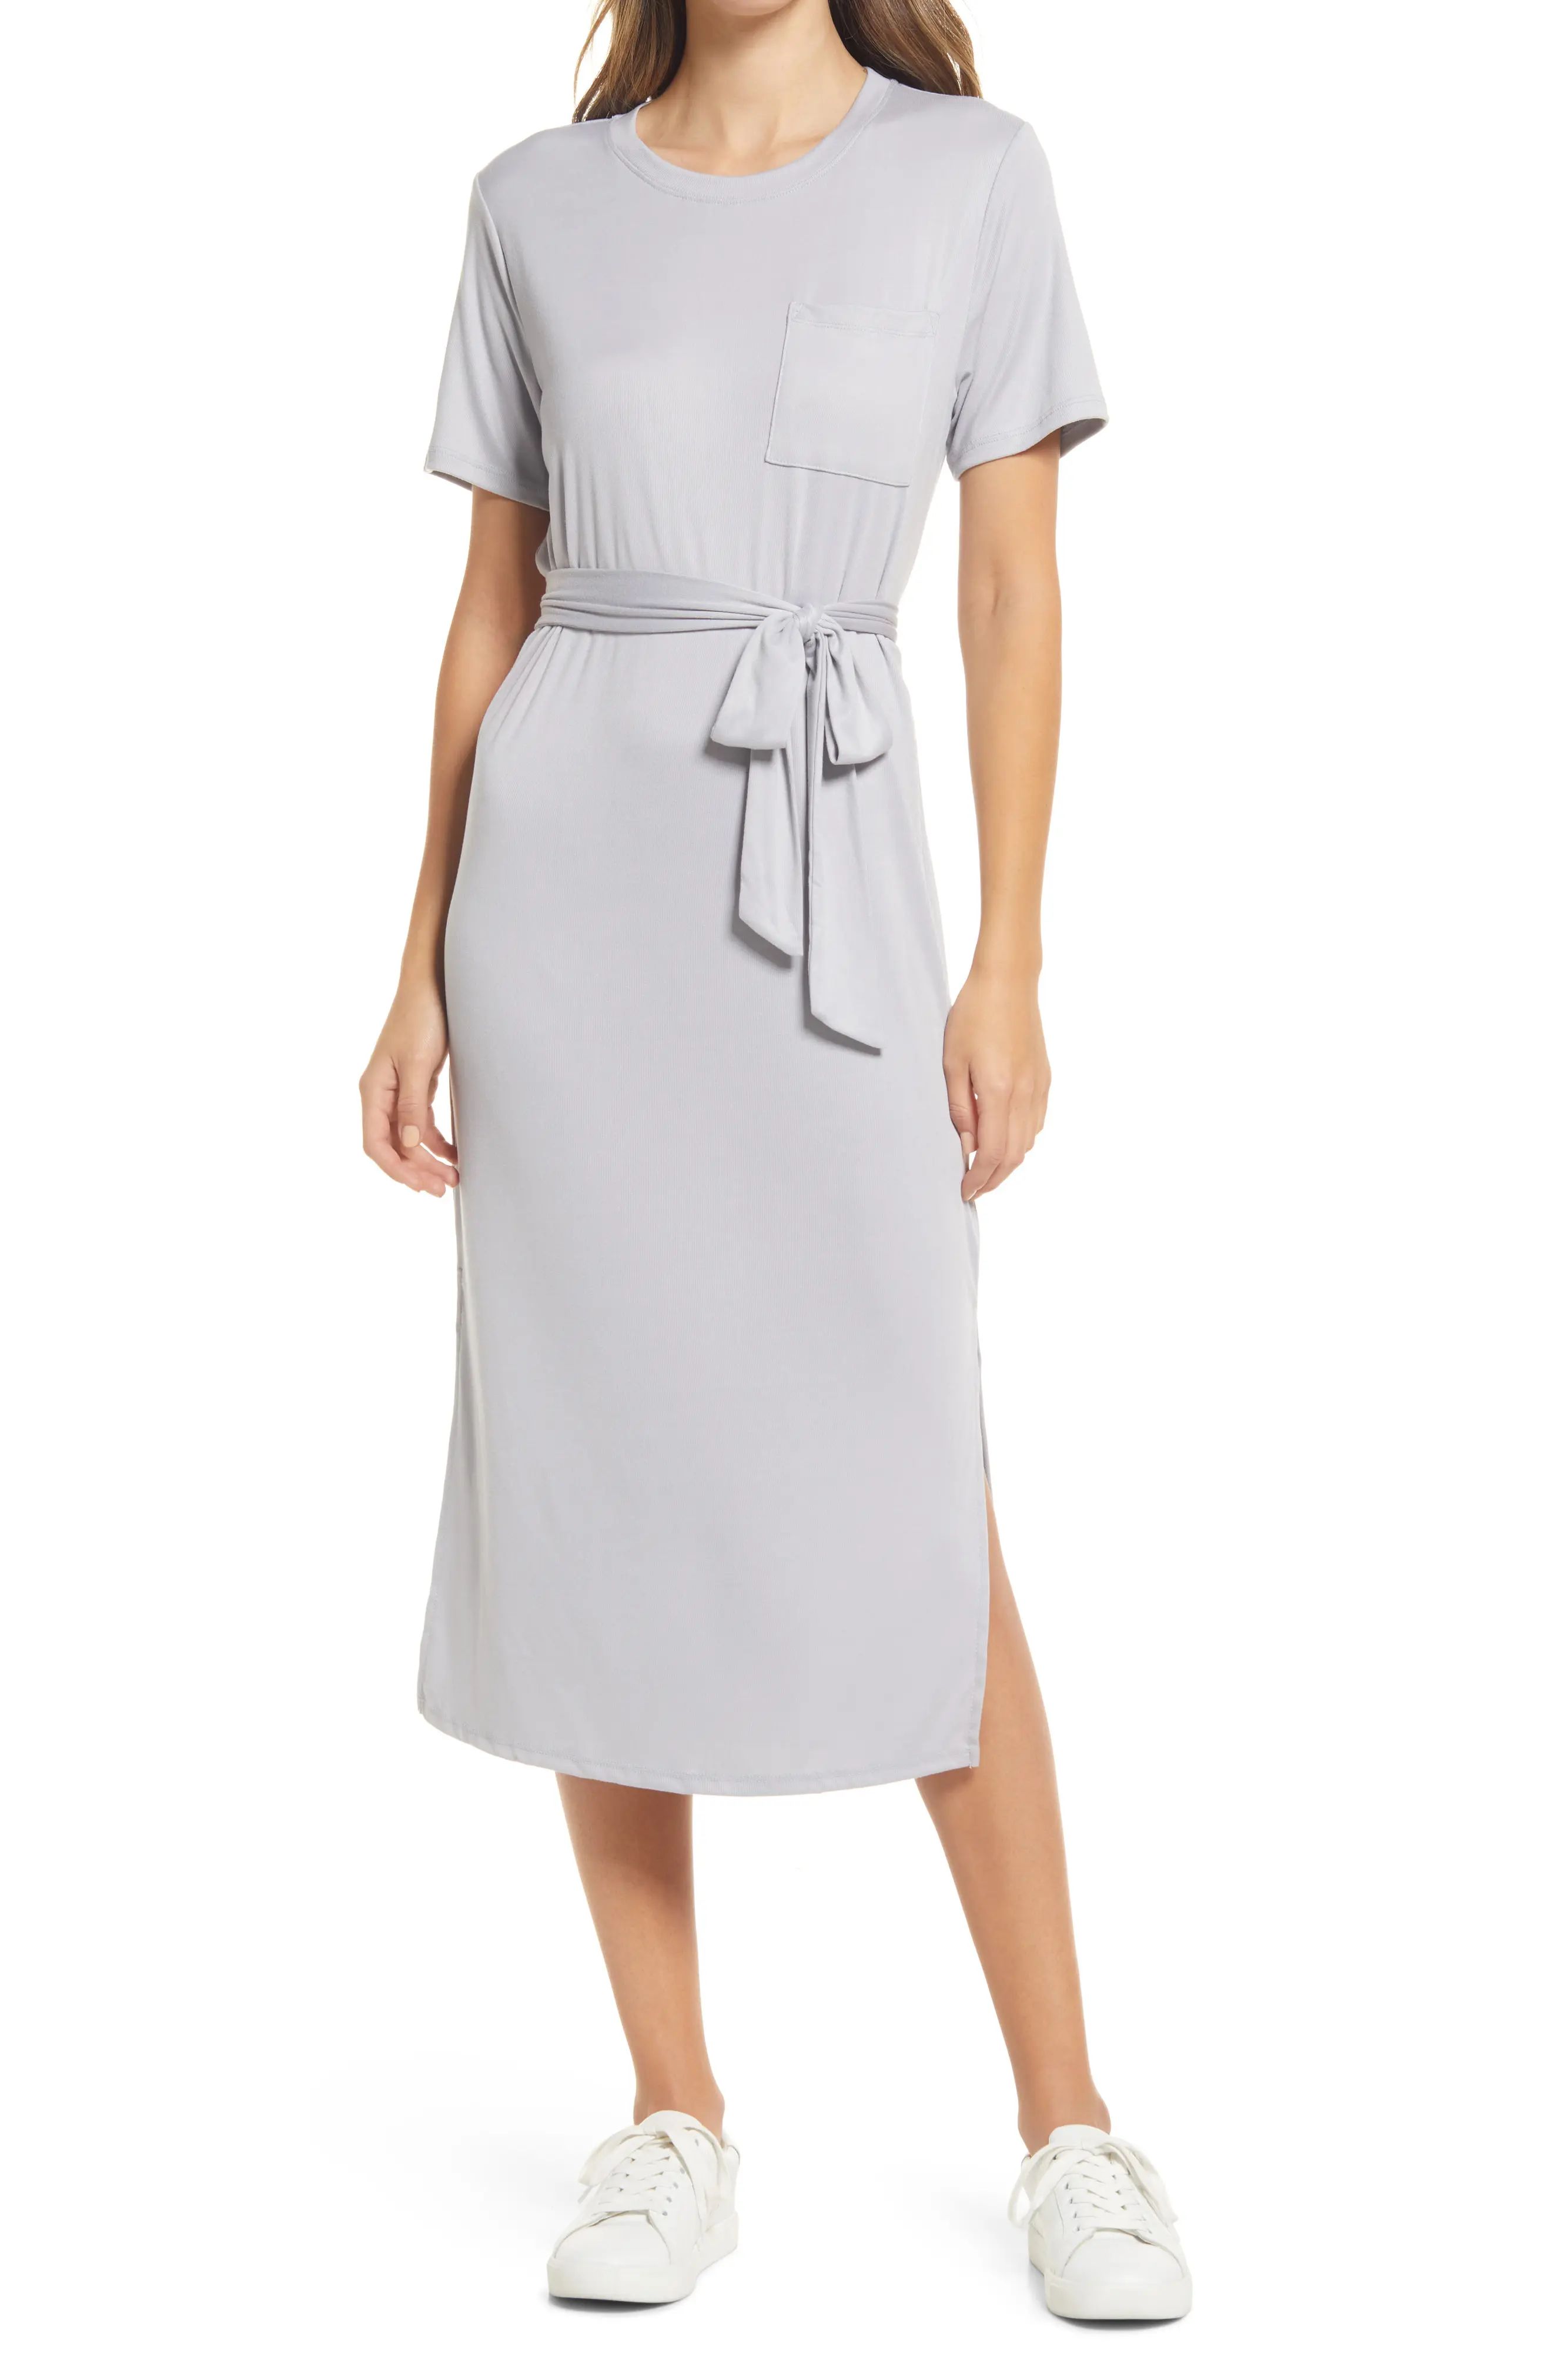 GIBSONLOOK Belted Pocket T-Shirt Dress in Silver Blue at Nordstrom, Size Medium | Nordstrom